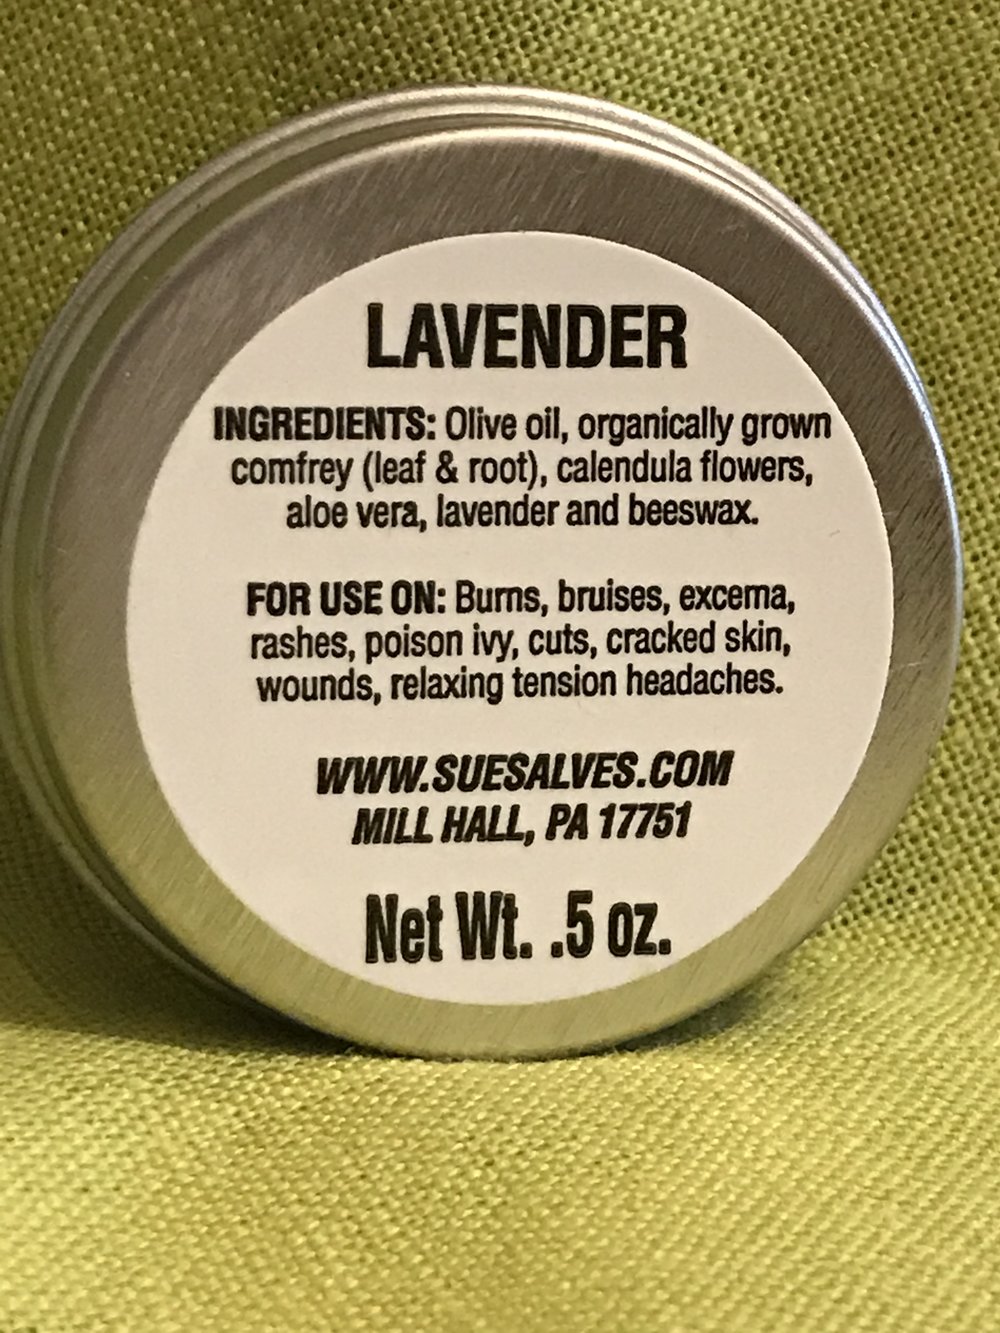 Lavender Salve ingredients Olive oil, organically grown comfrey (leaf & root), calendula flowers, aloe vera, lavender, bees wax